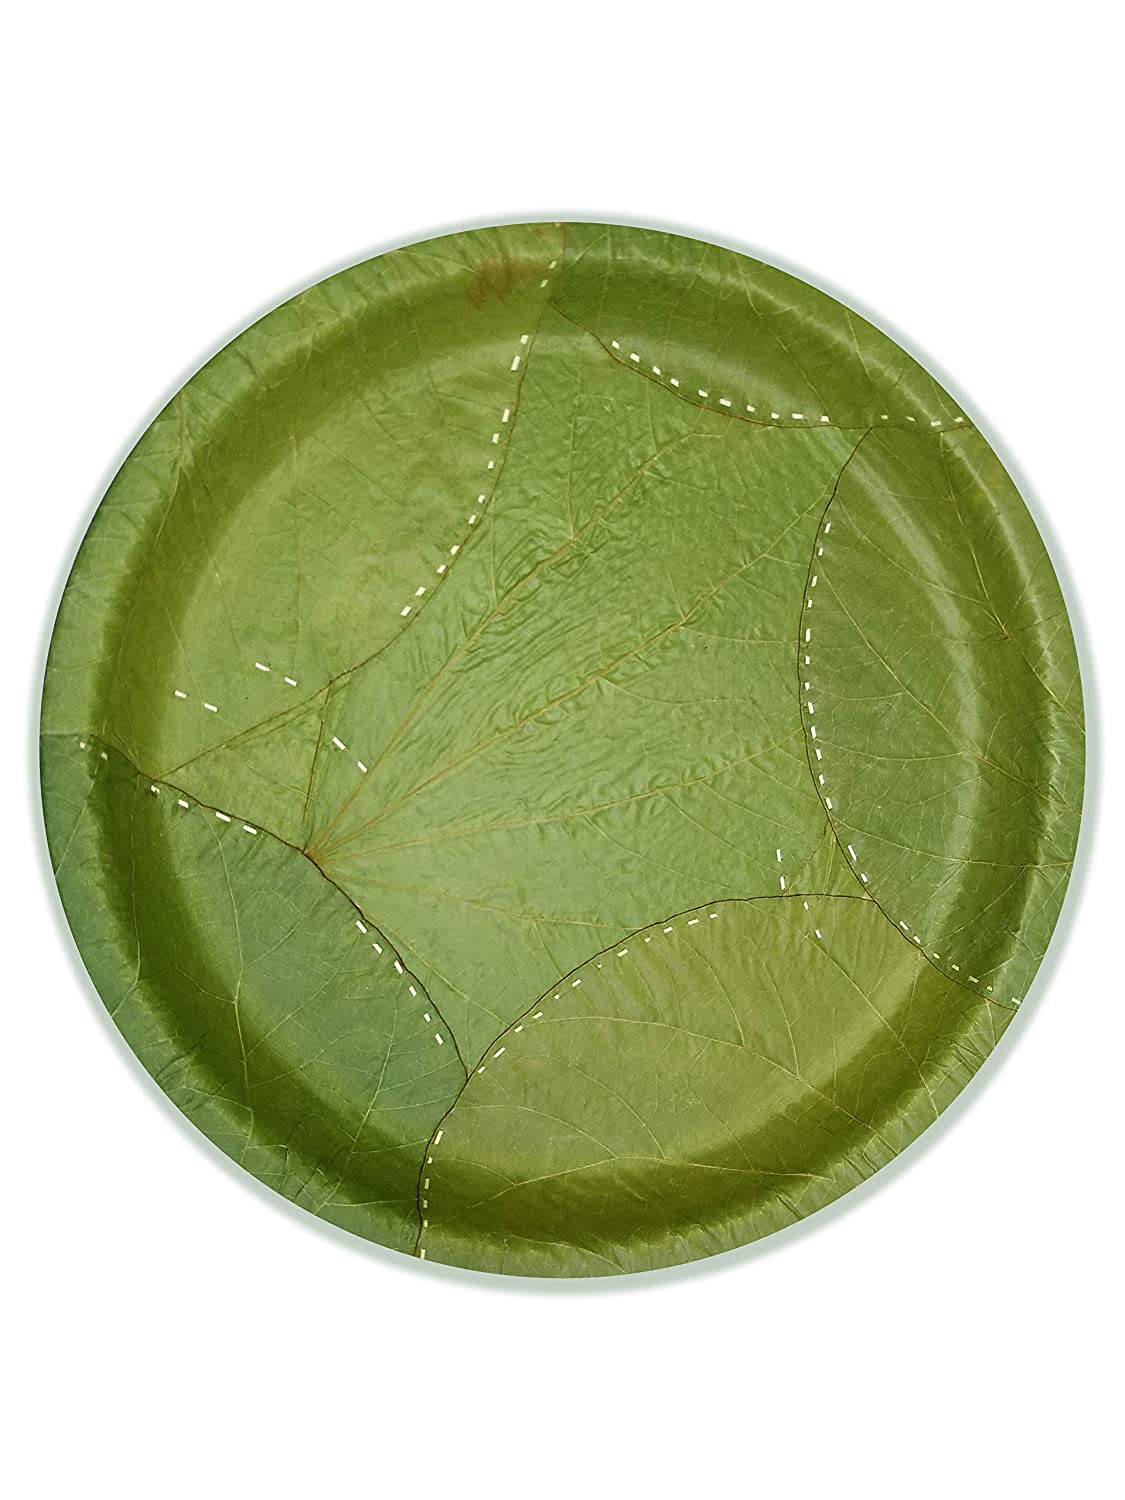 https://tamilcrew.com/wp-content/uploads/2021/04/Siali-Leaf-Plates.jpg